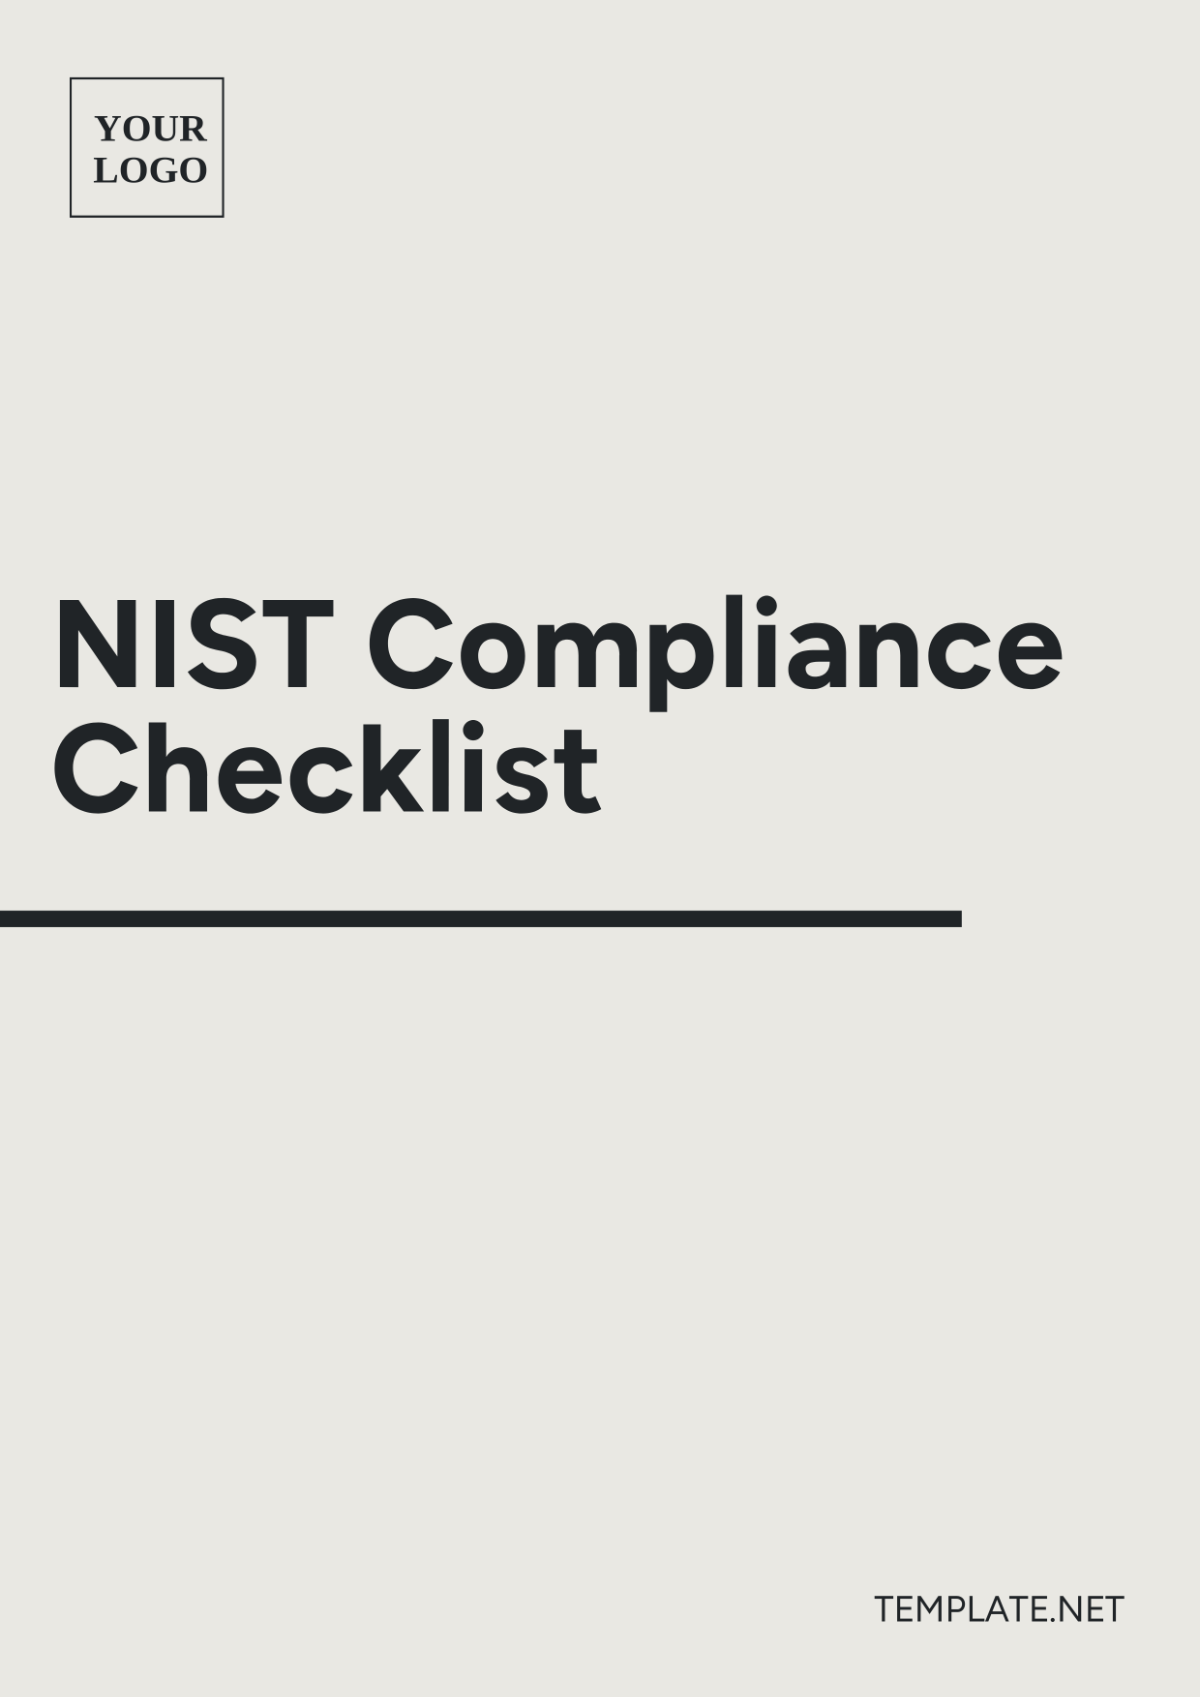 NIST Compliance Checklist Template